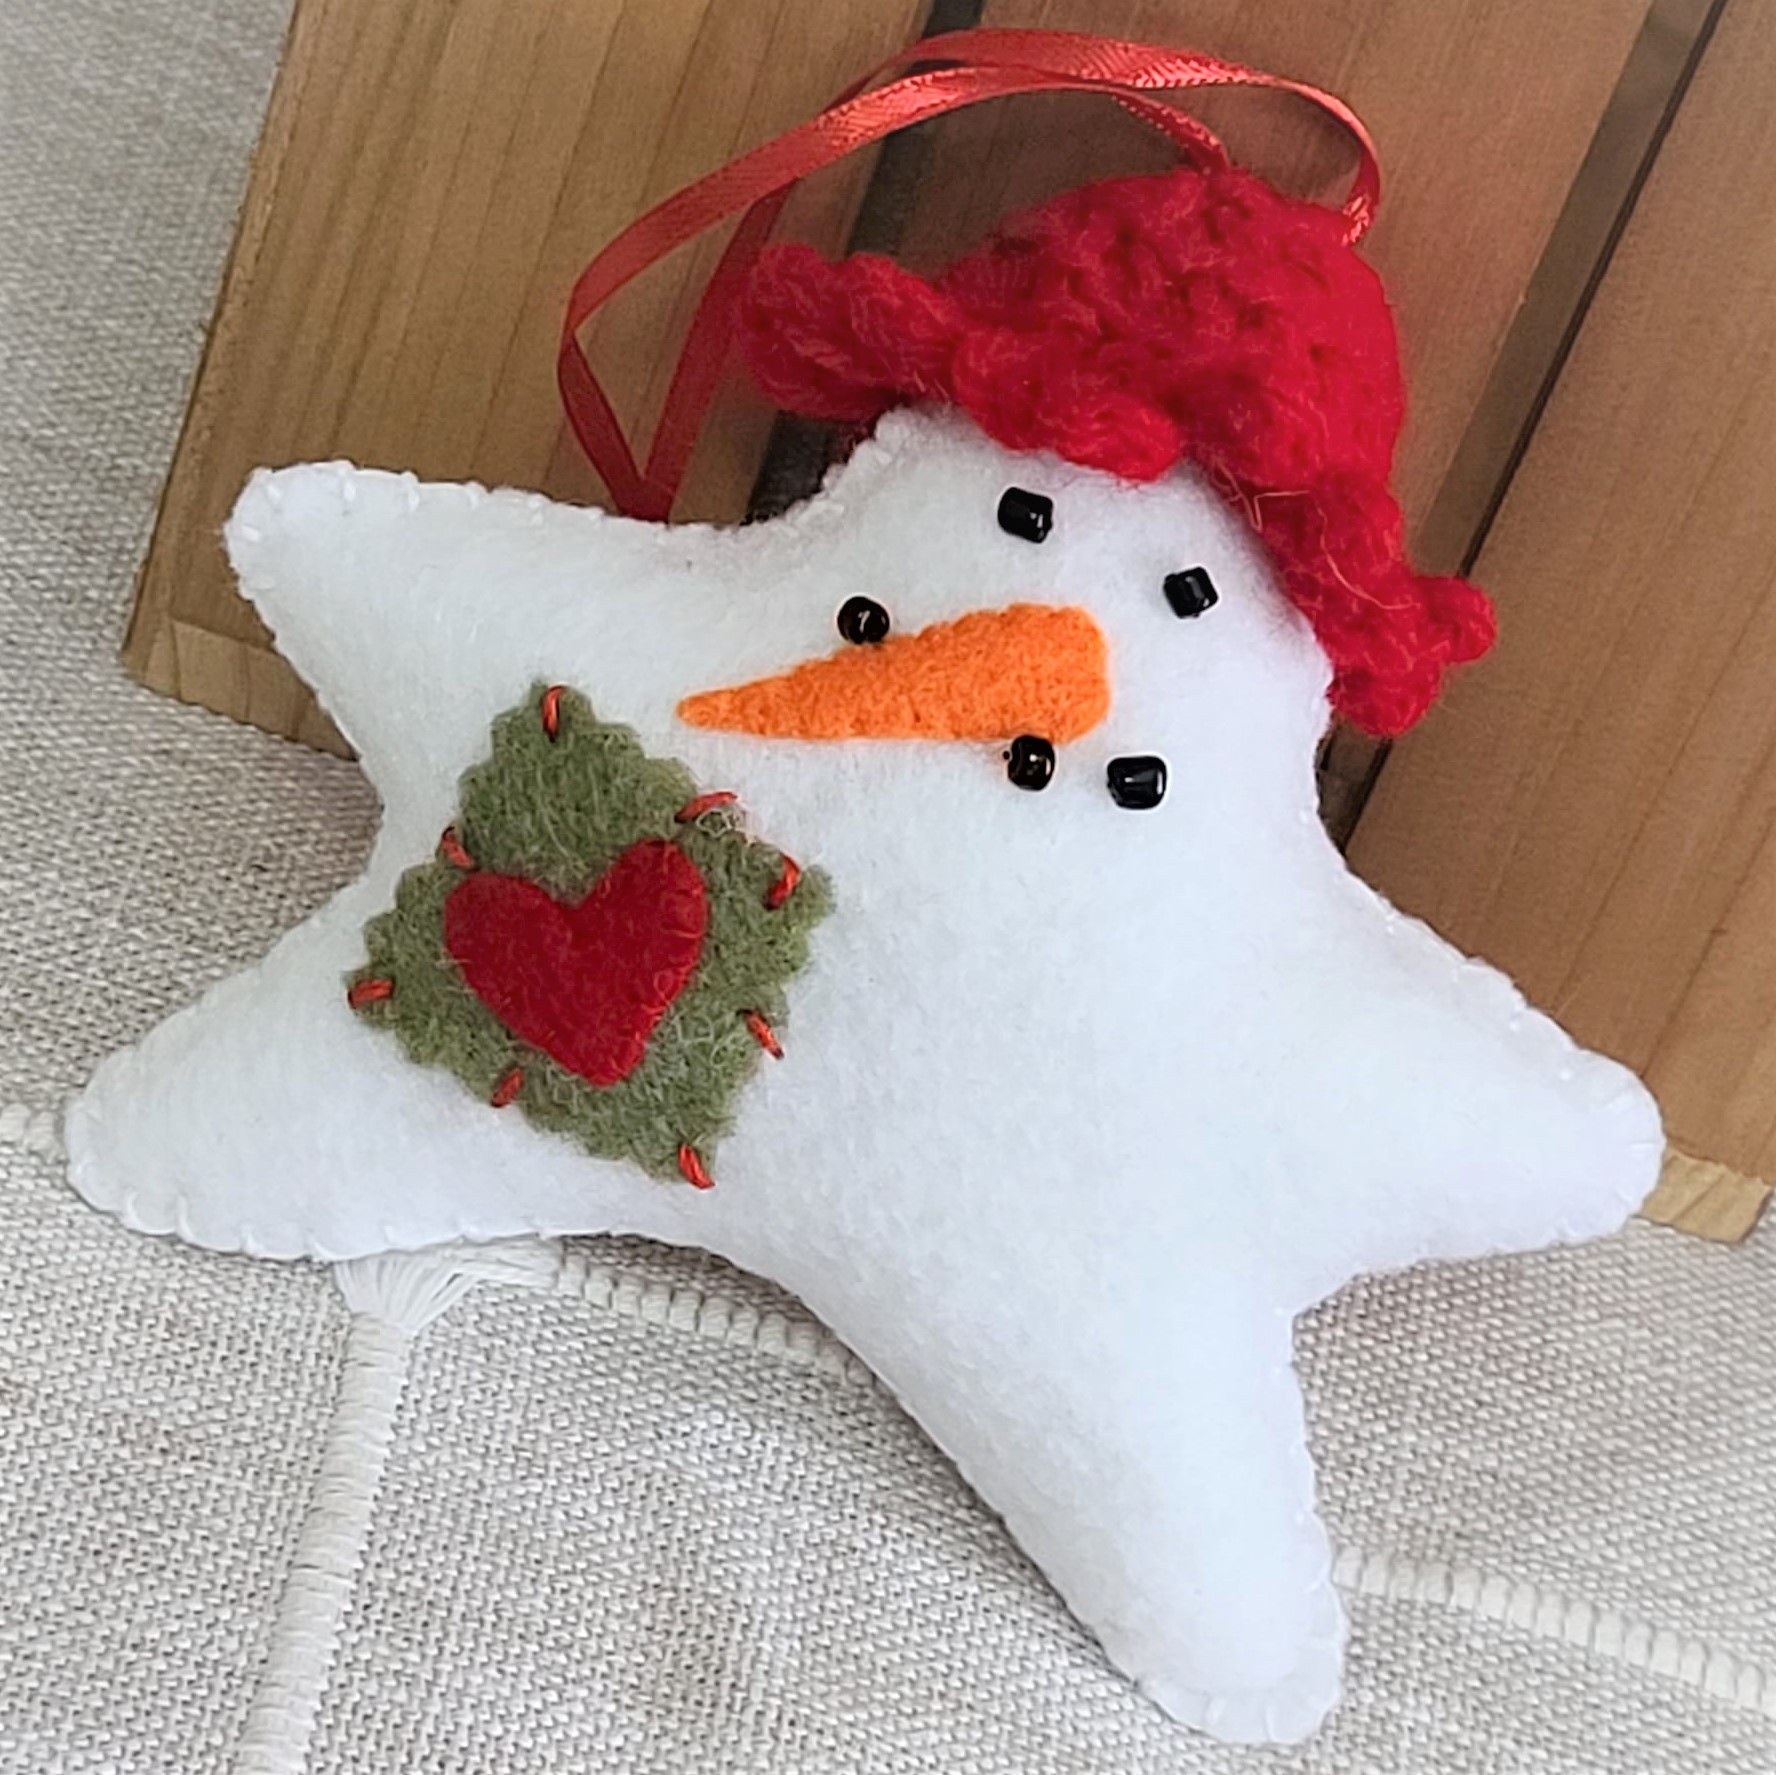 Felt Snowman star ornament with crochet hat - red hat